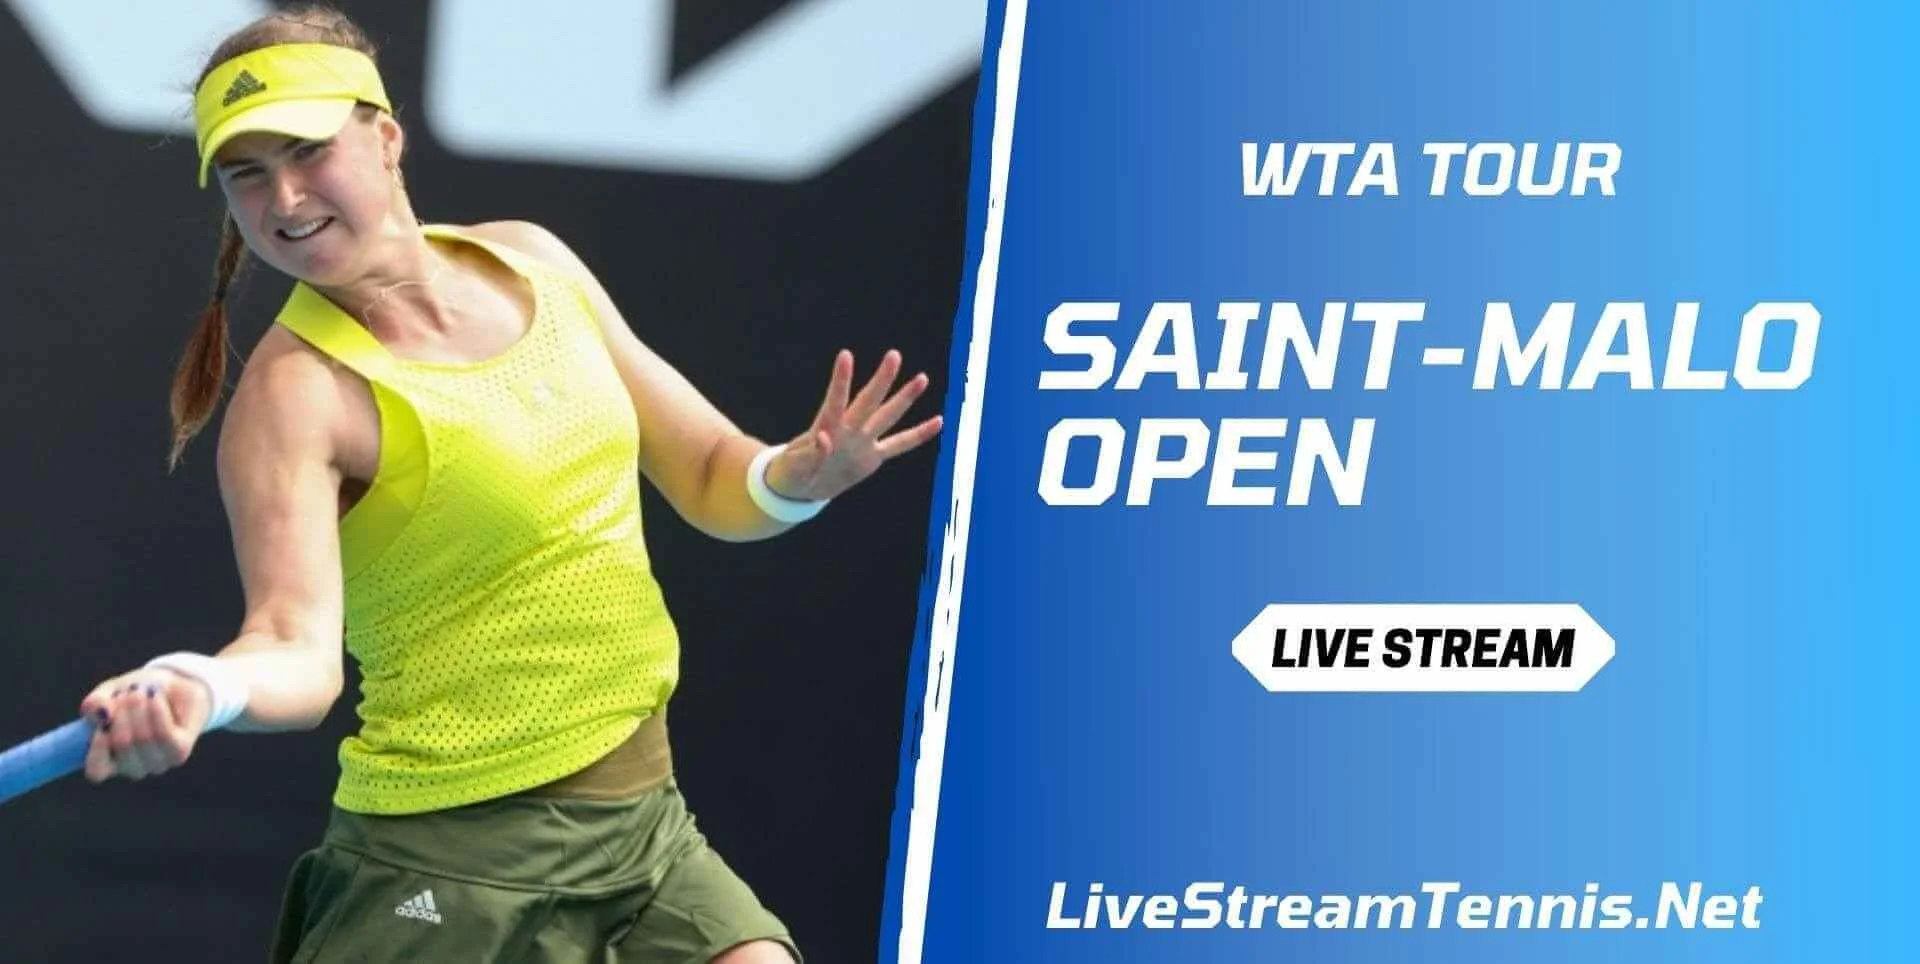 Saint Malo Open Live Stream Tennis WTA